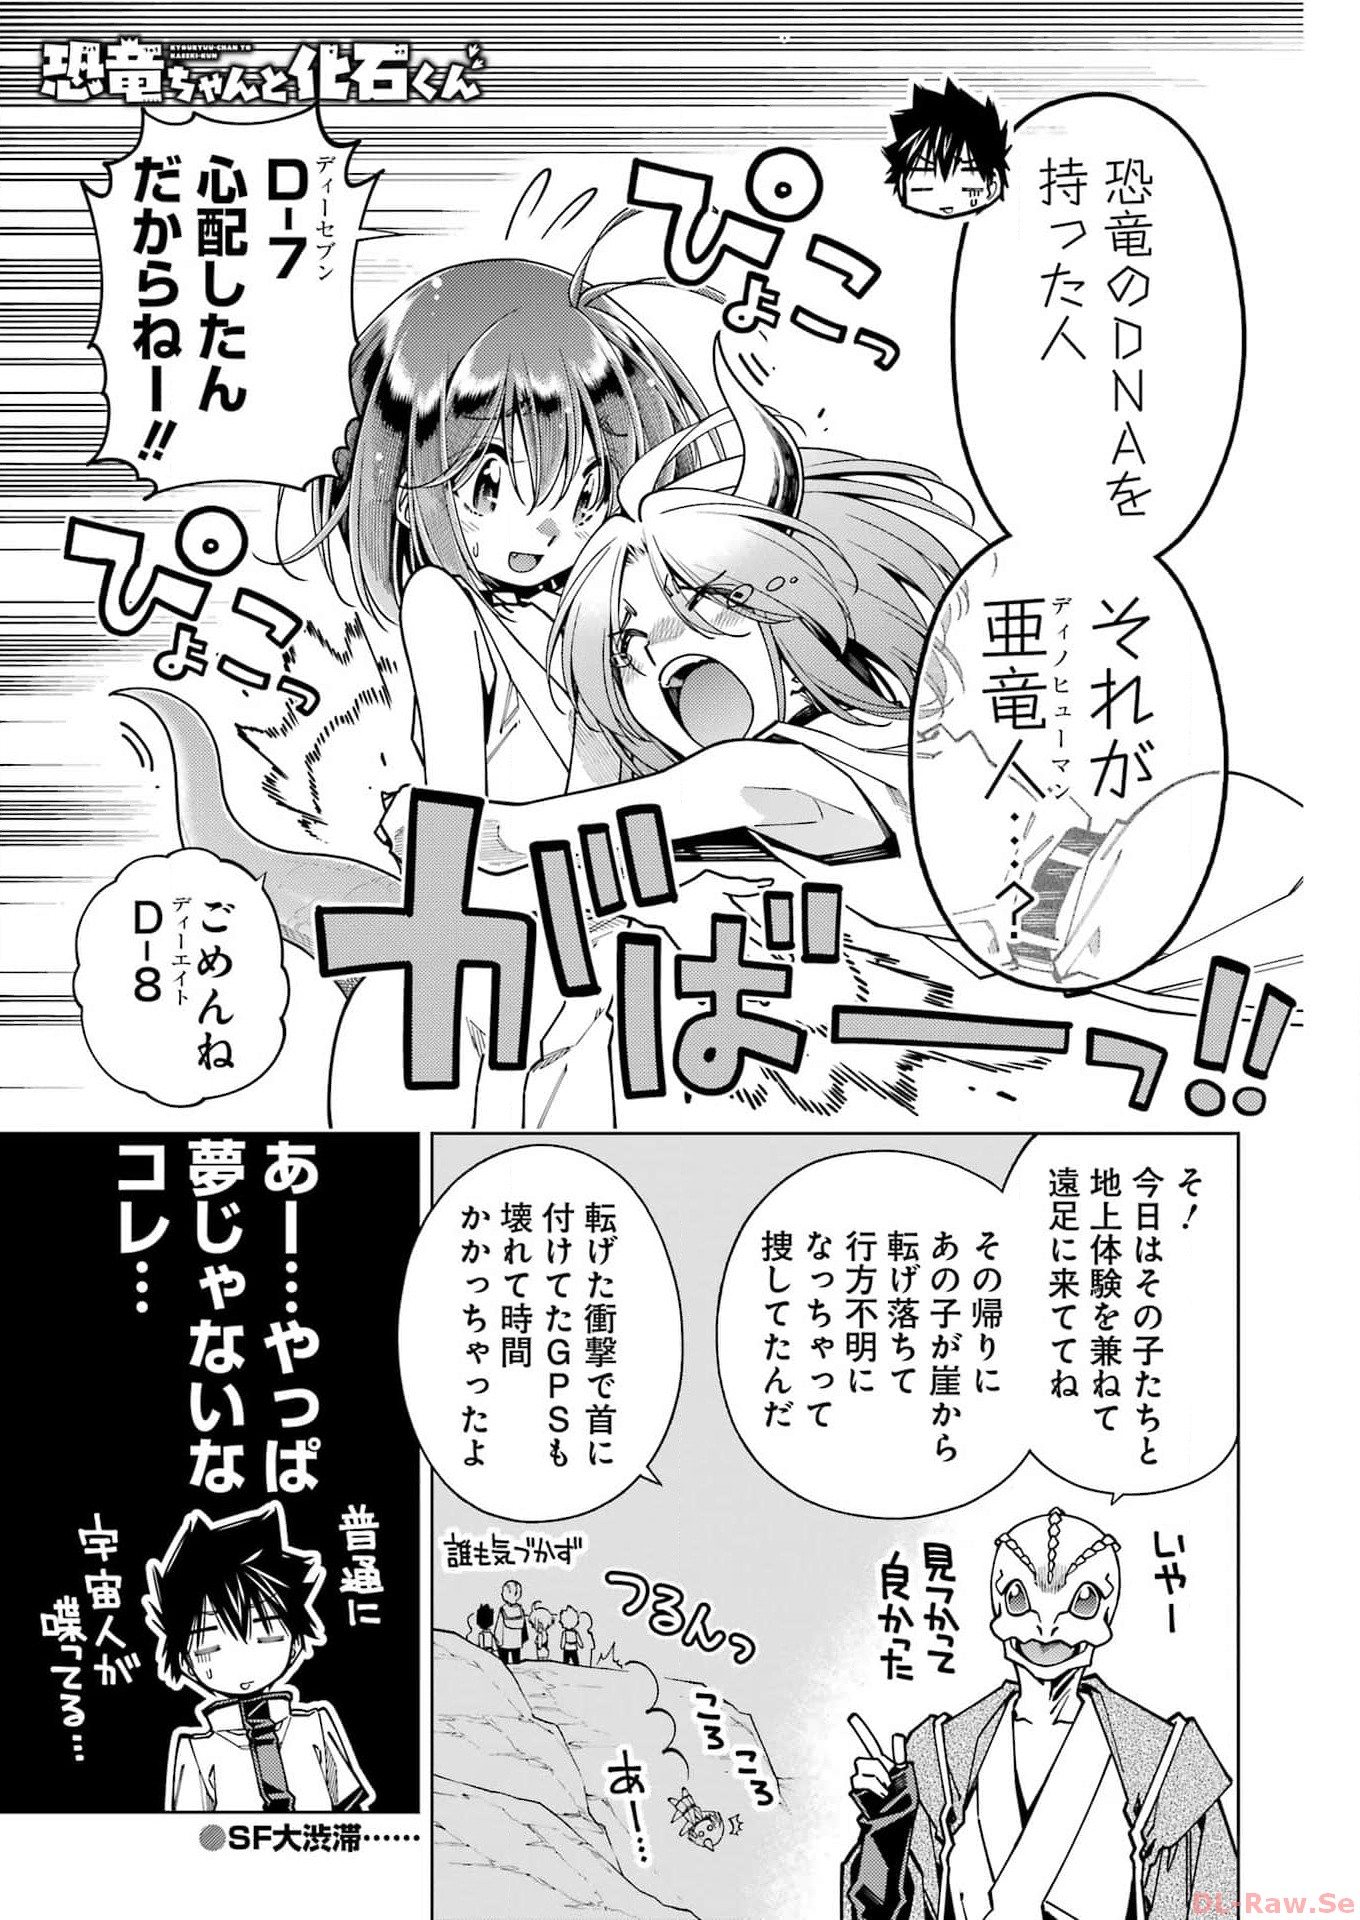 Kyouryu-chan to Kaseki-kun - Chapter 39 - Page 1